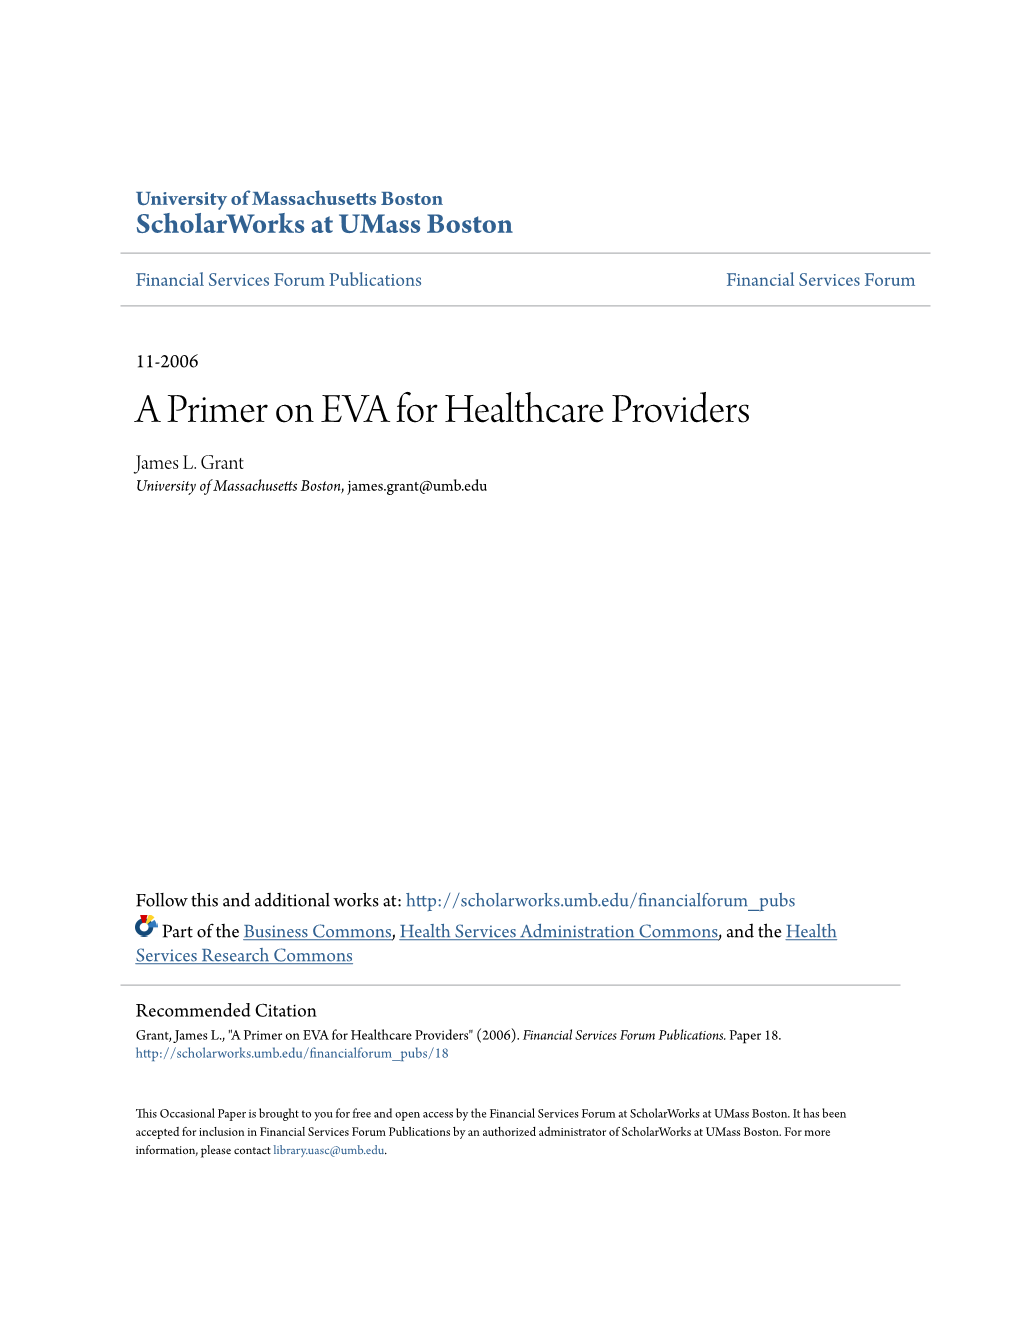 A Primer on EVA for Healthcare Providers James L